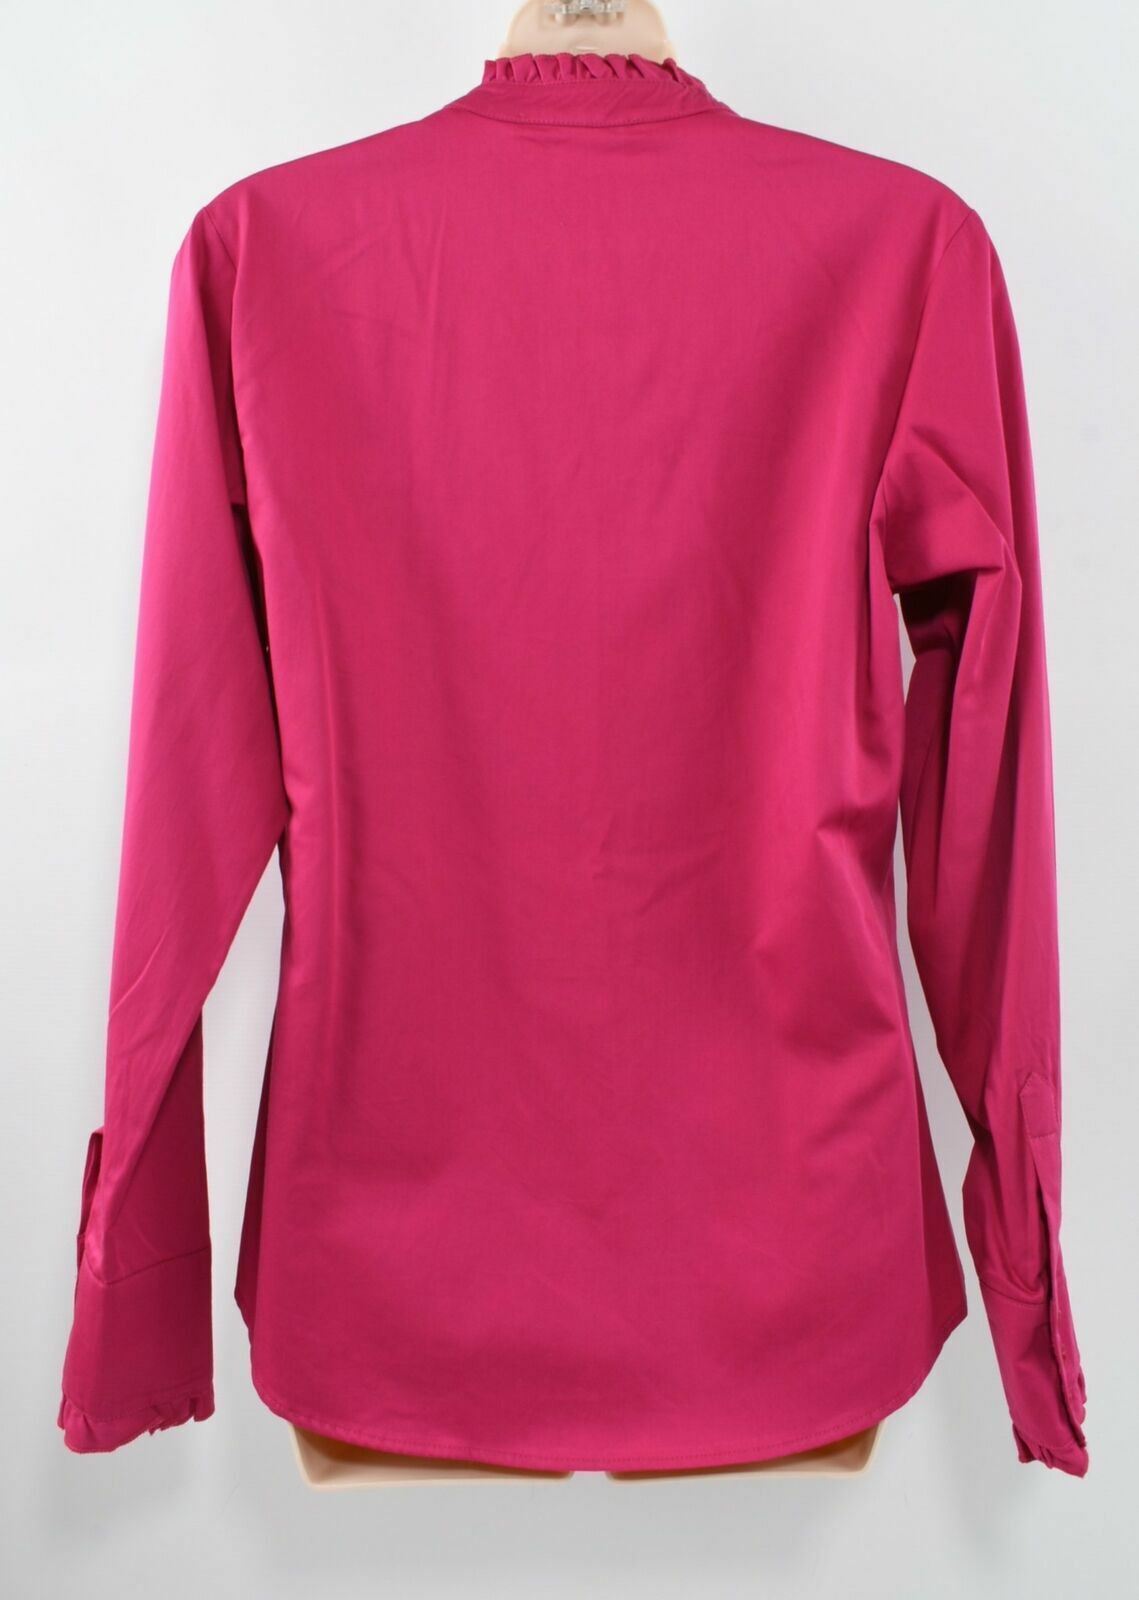 THE SHIRT COMPANY Women's Long Sleeved Button Up 'Carlotta' Shirt- size UK 12